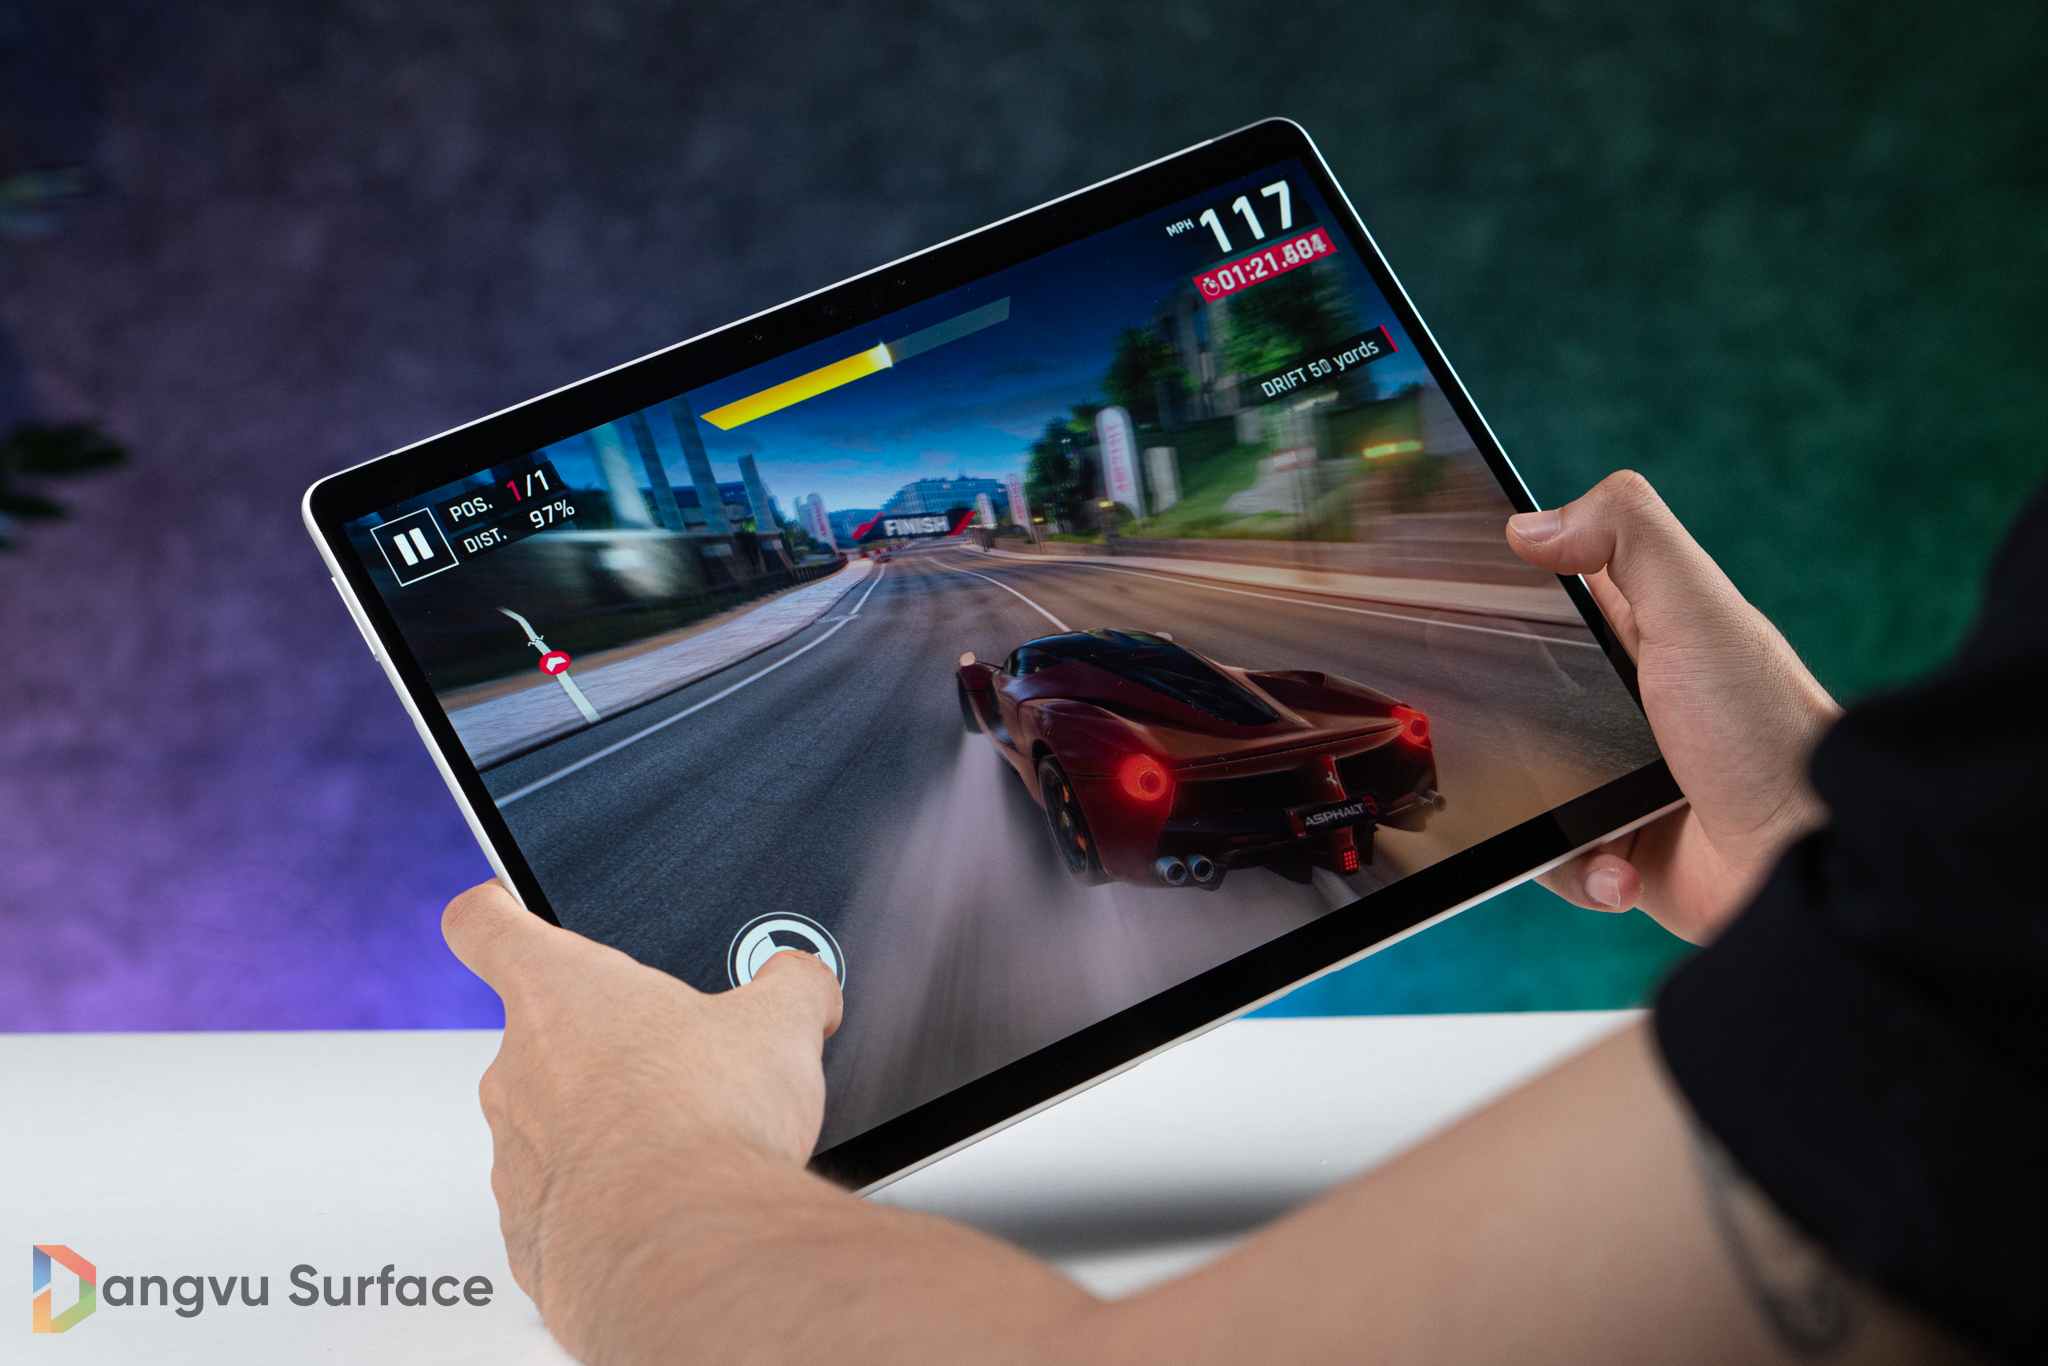 Surface Pro 11